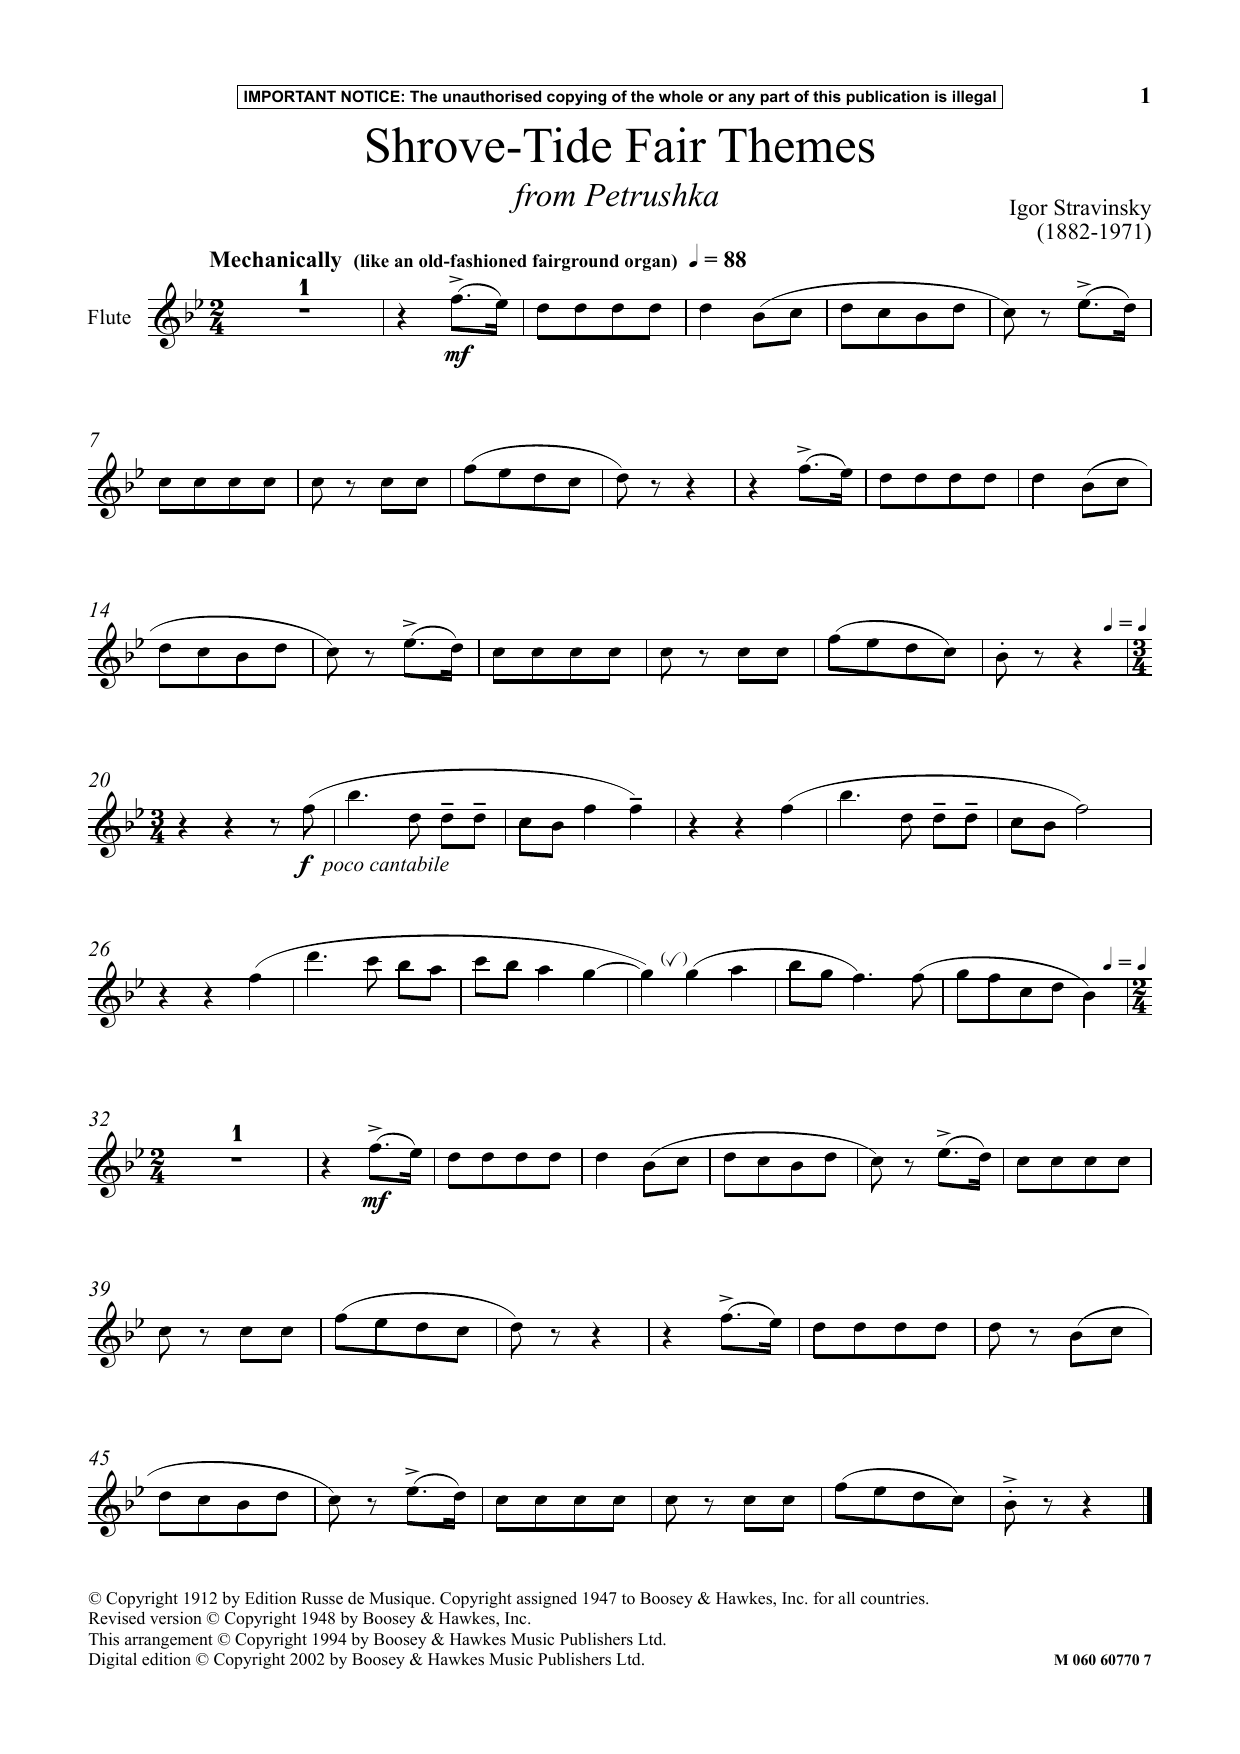 Download Igor Stravinsky Shrove Tide Fair Themes (from Petrushka Sheet Music